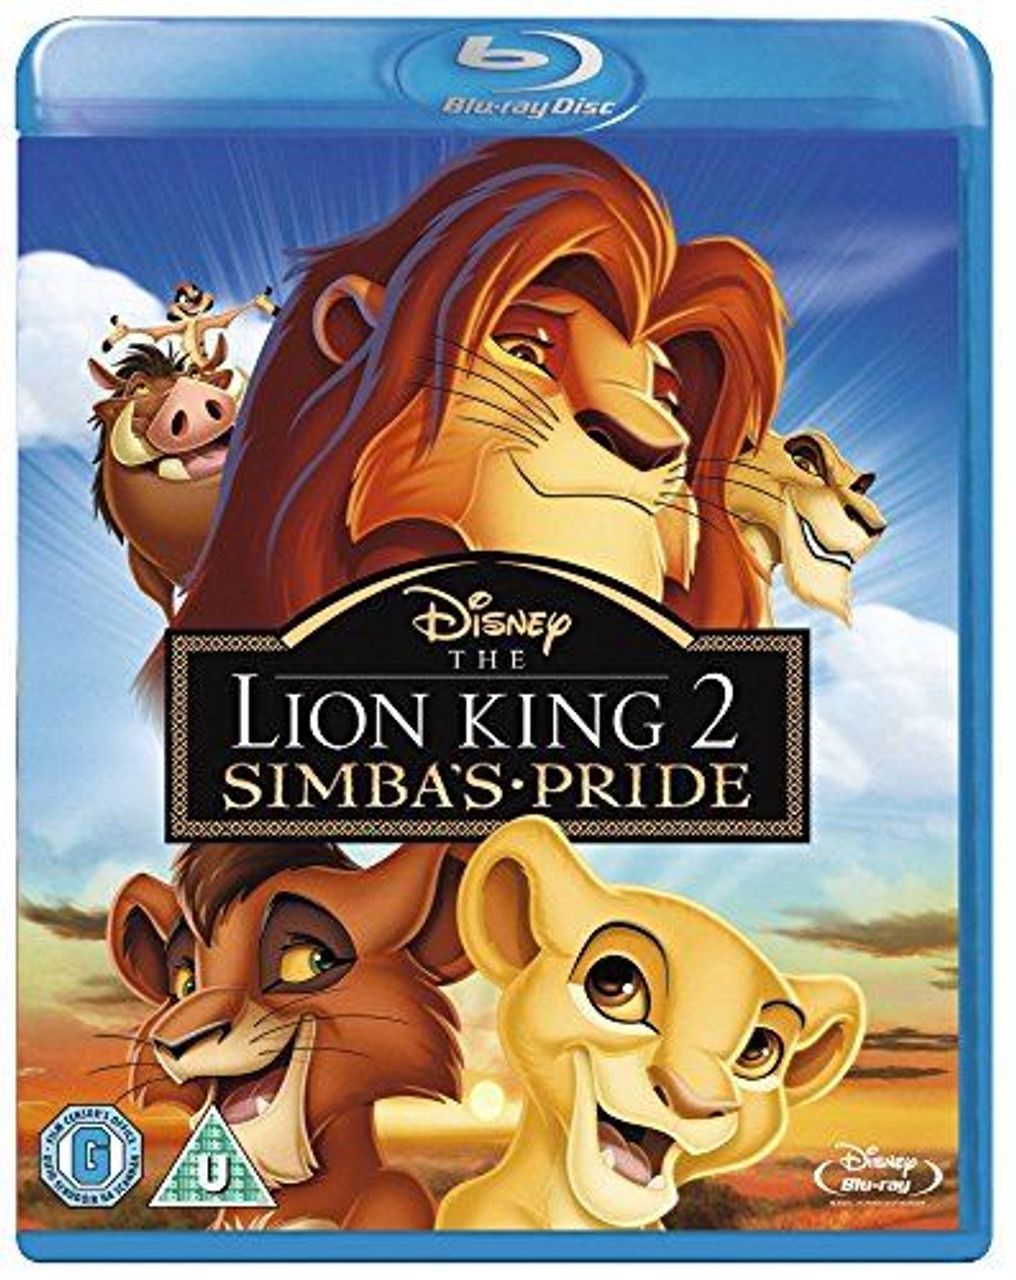 Disney's The Lion King 2: Simba's Pride Blu-ray